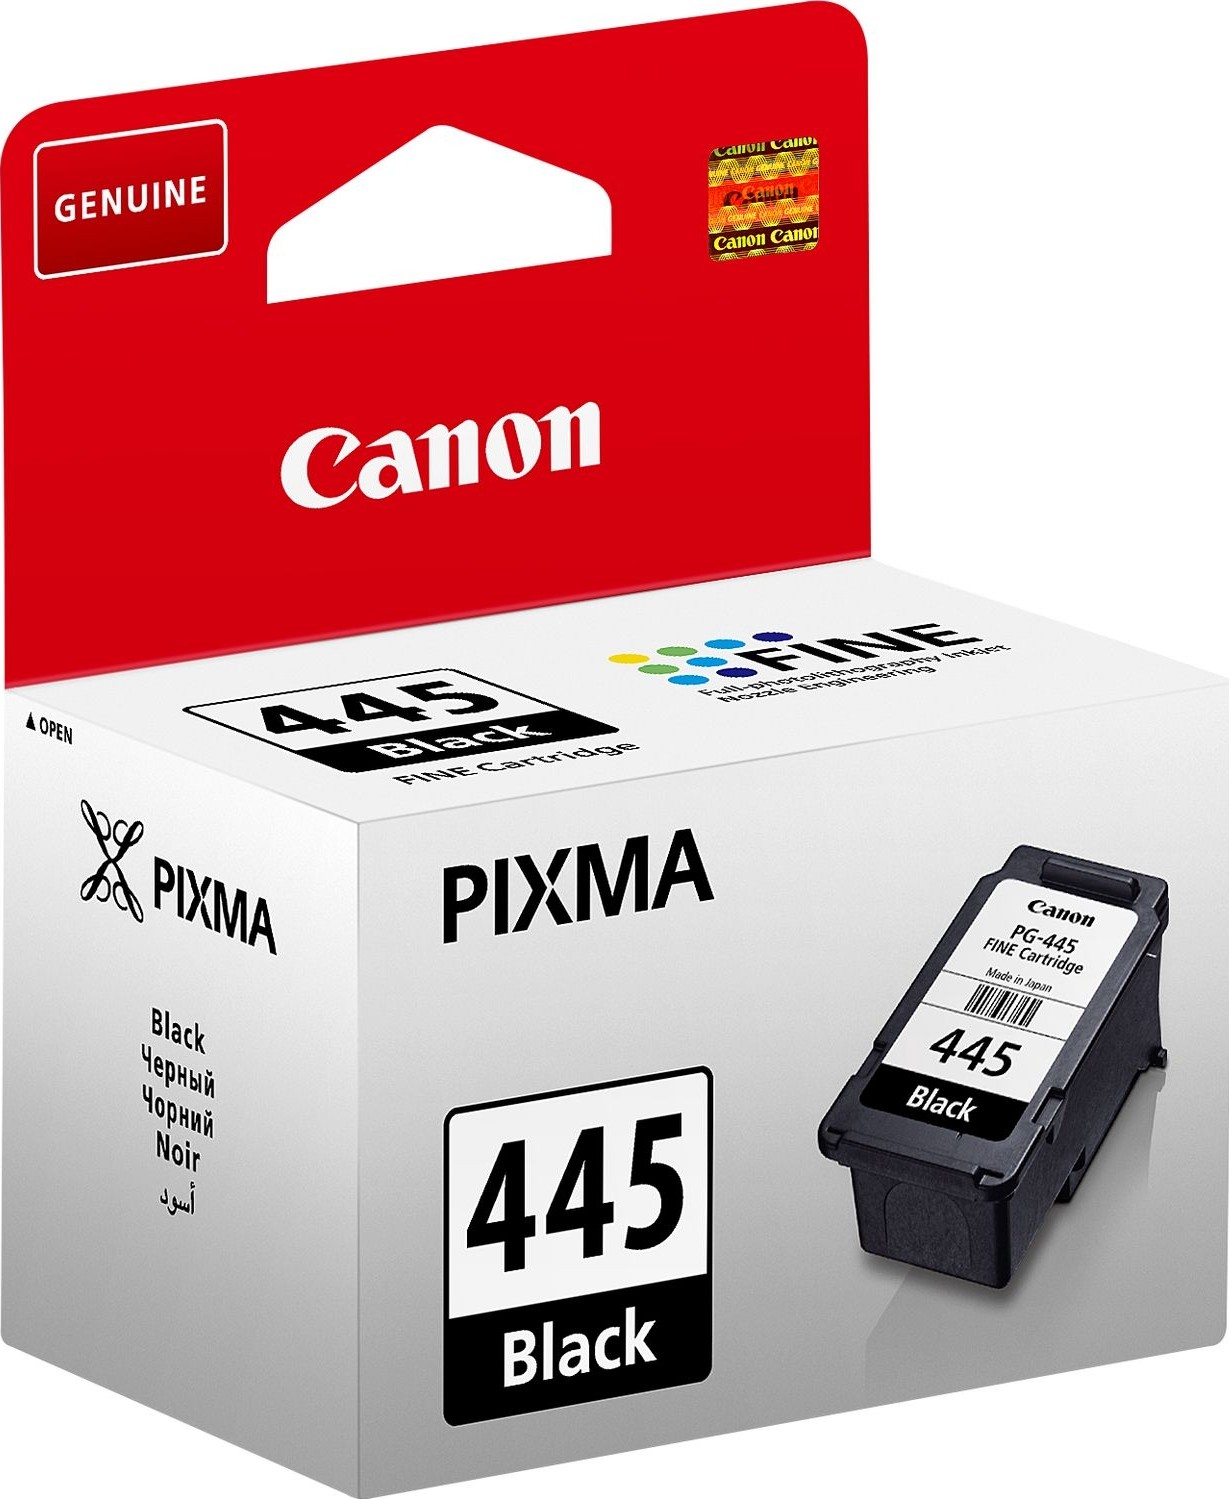 Canon Pixma PG-445 Black Cartridge